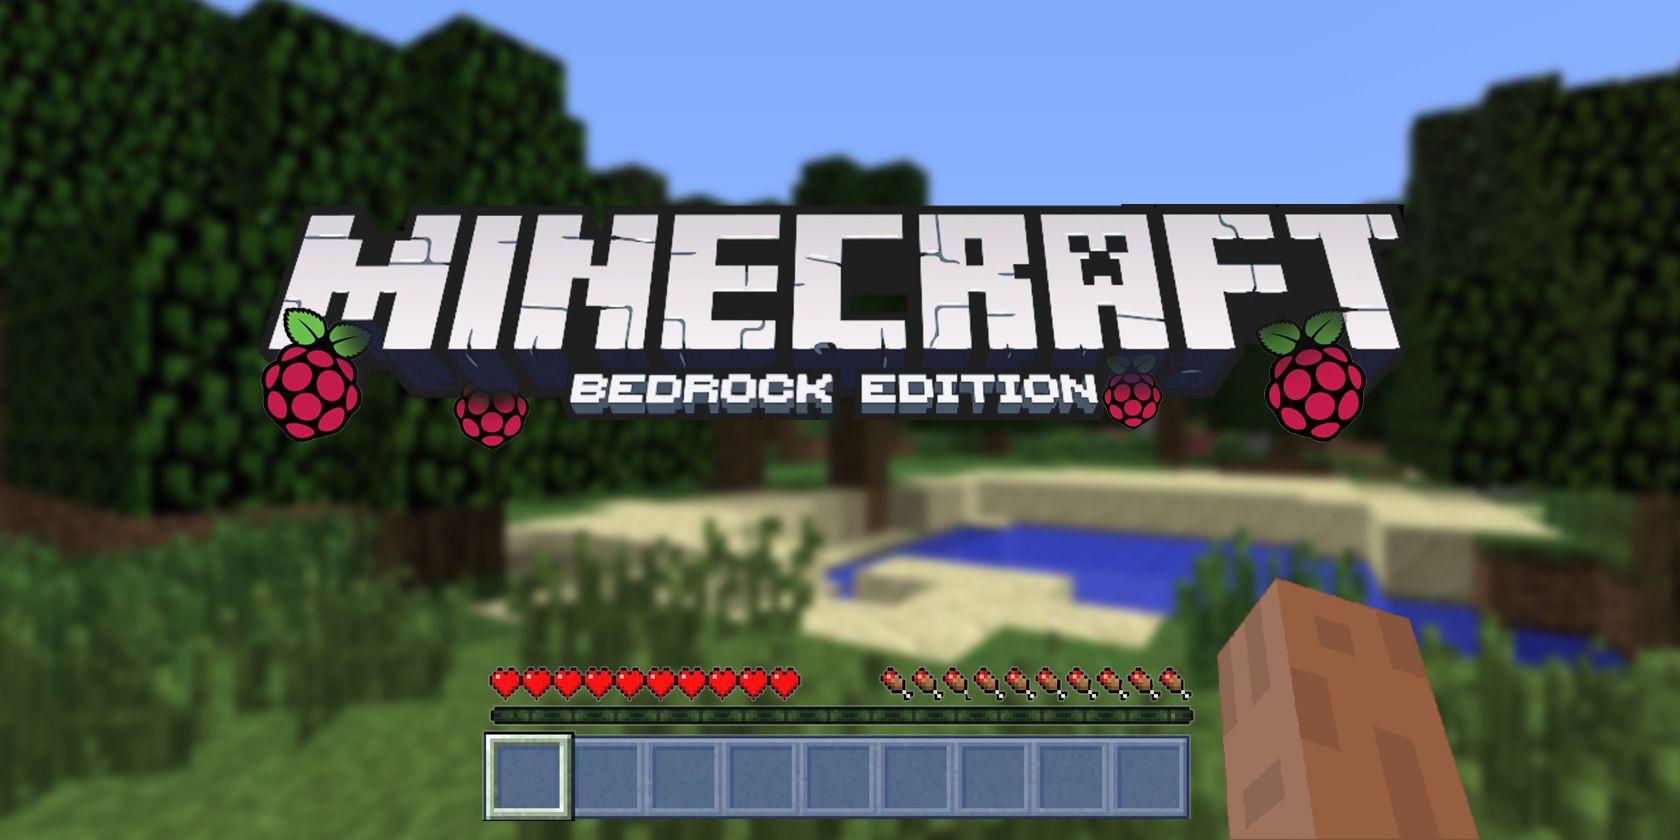 Minecraft Bedrock Edition title logo with Raspberry Pi logos 